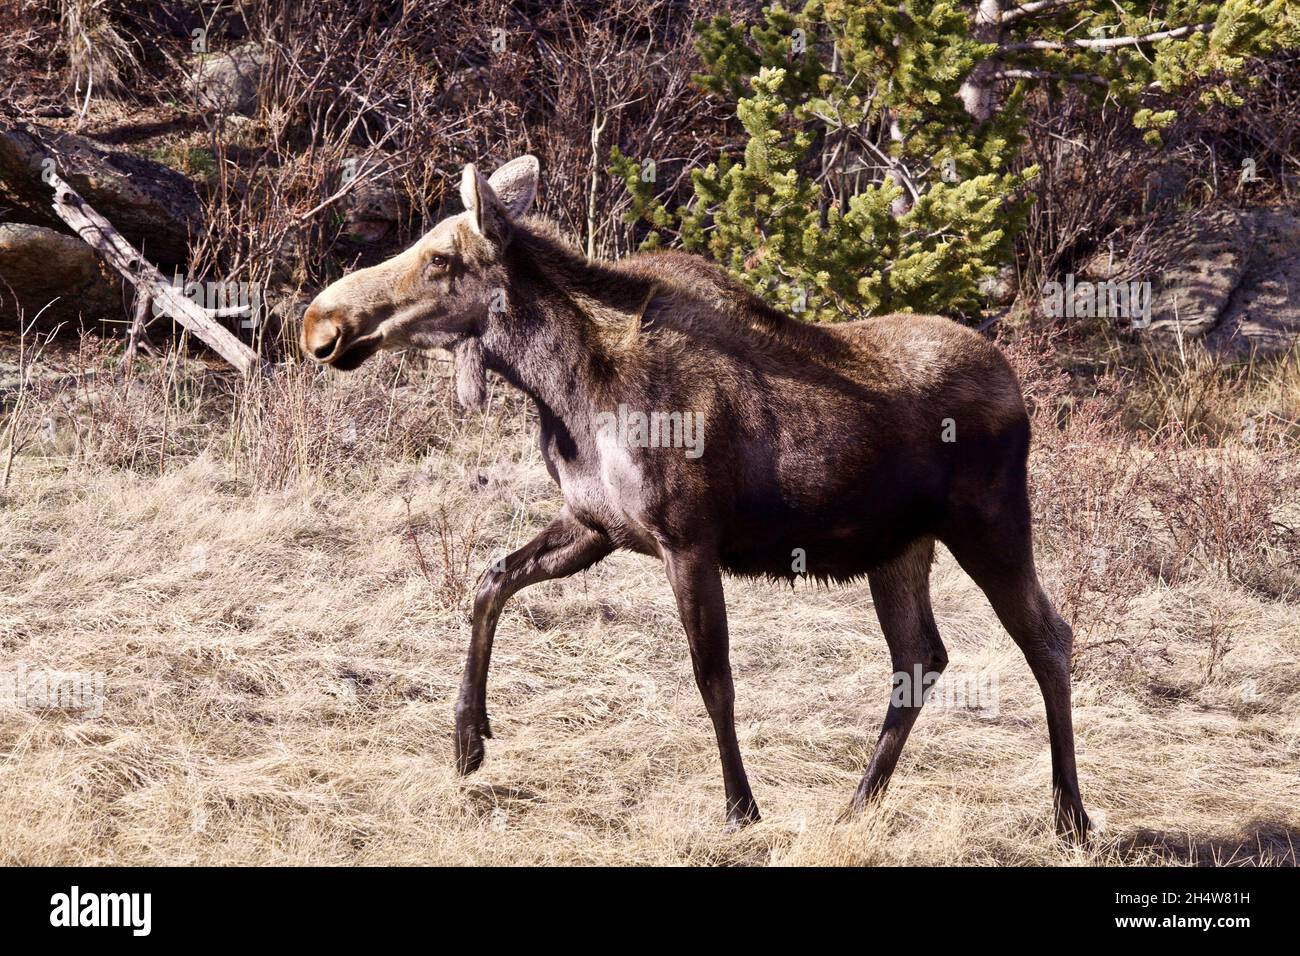 A Shiras moose ambling through a low dormant grassy meadow. Stock Photo